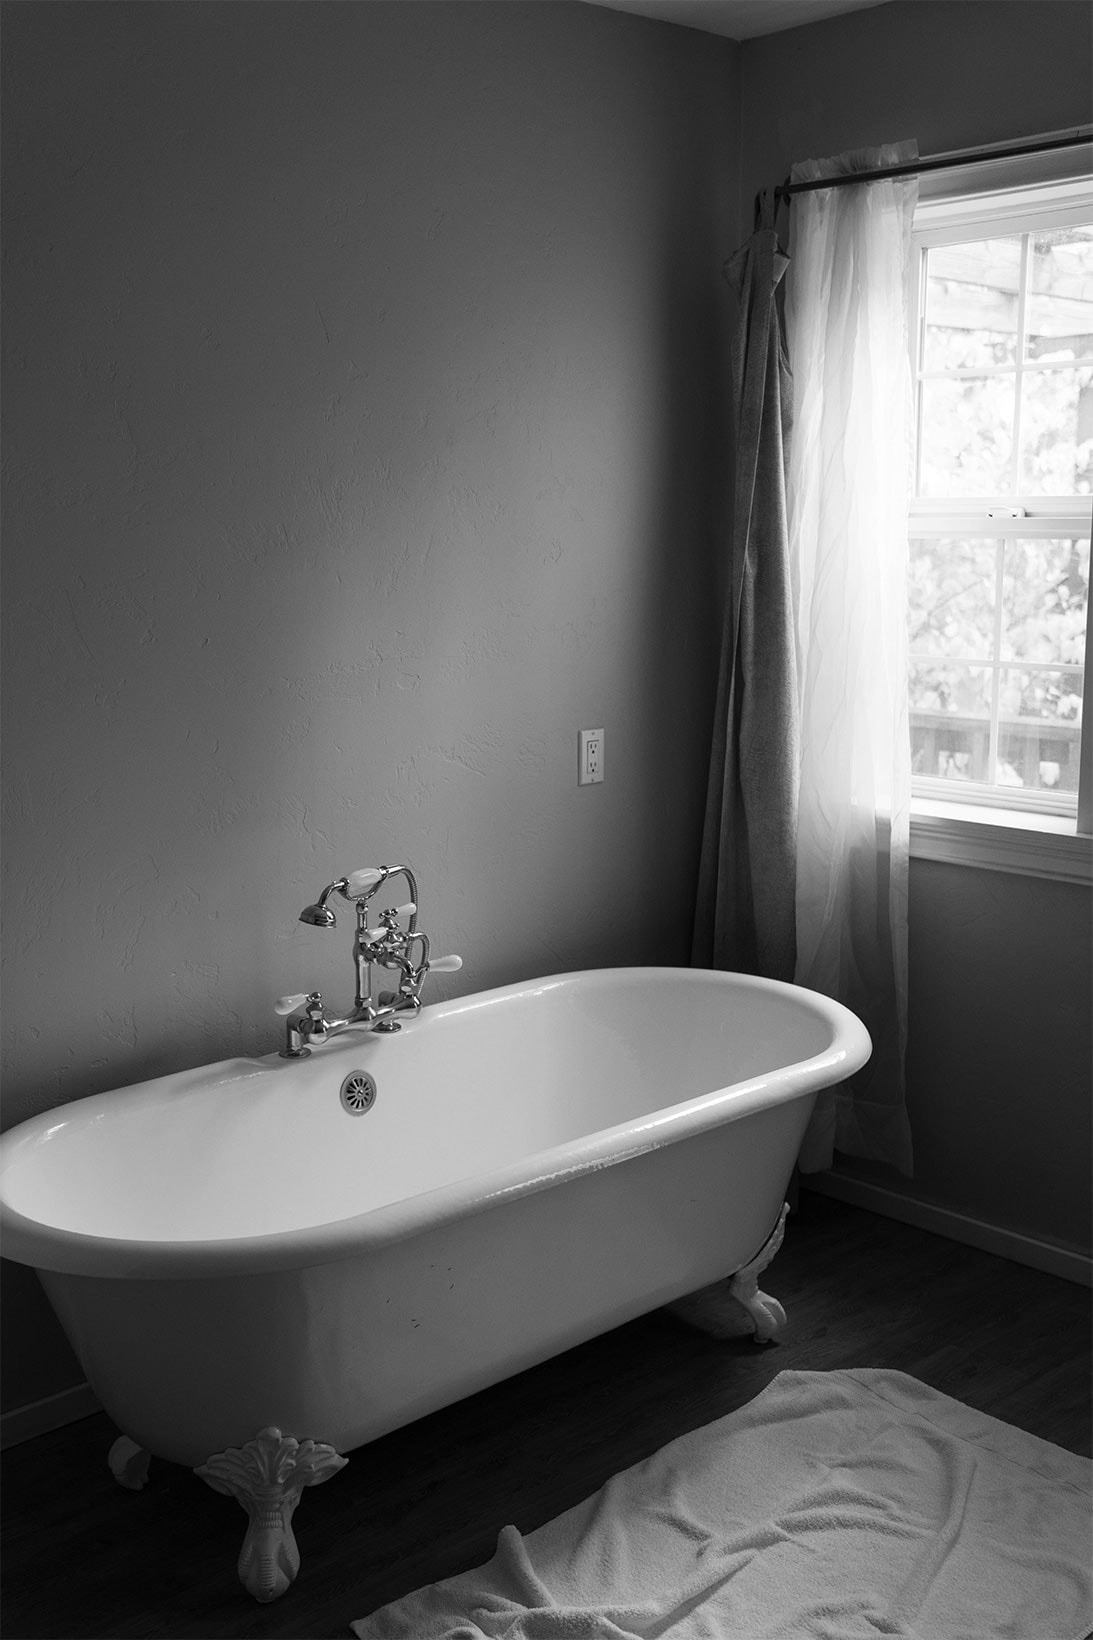 bath tub relax destress black and white